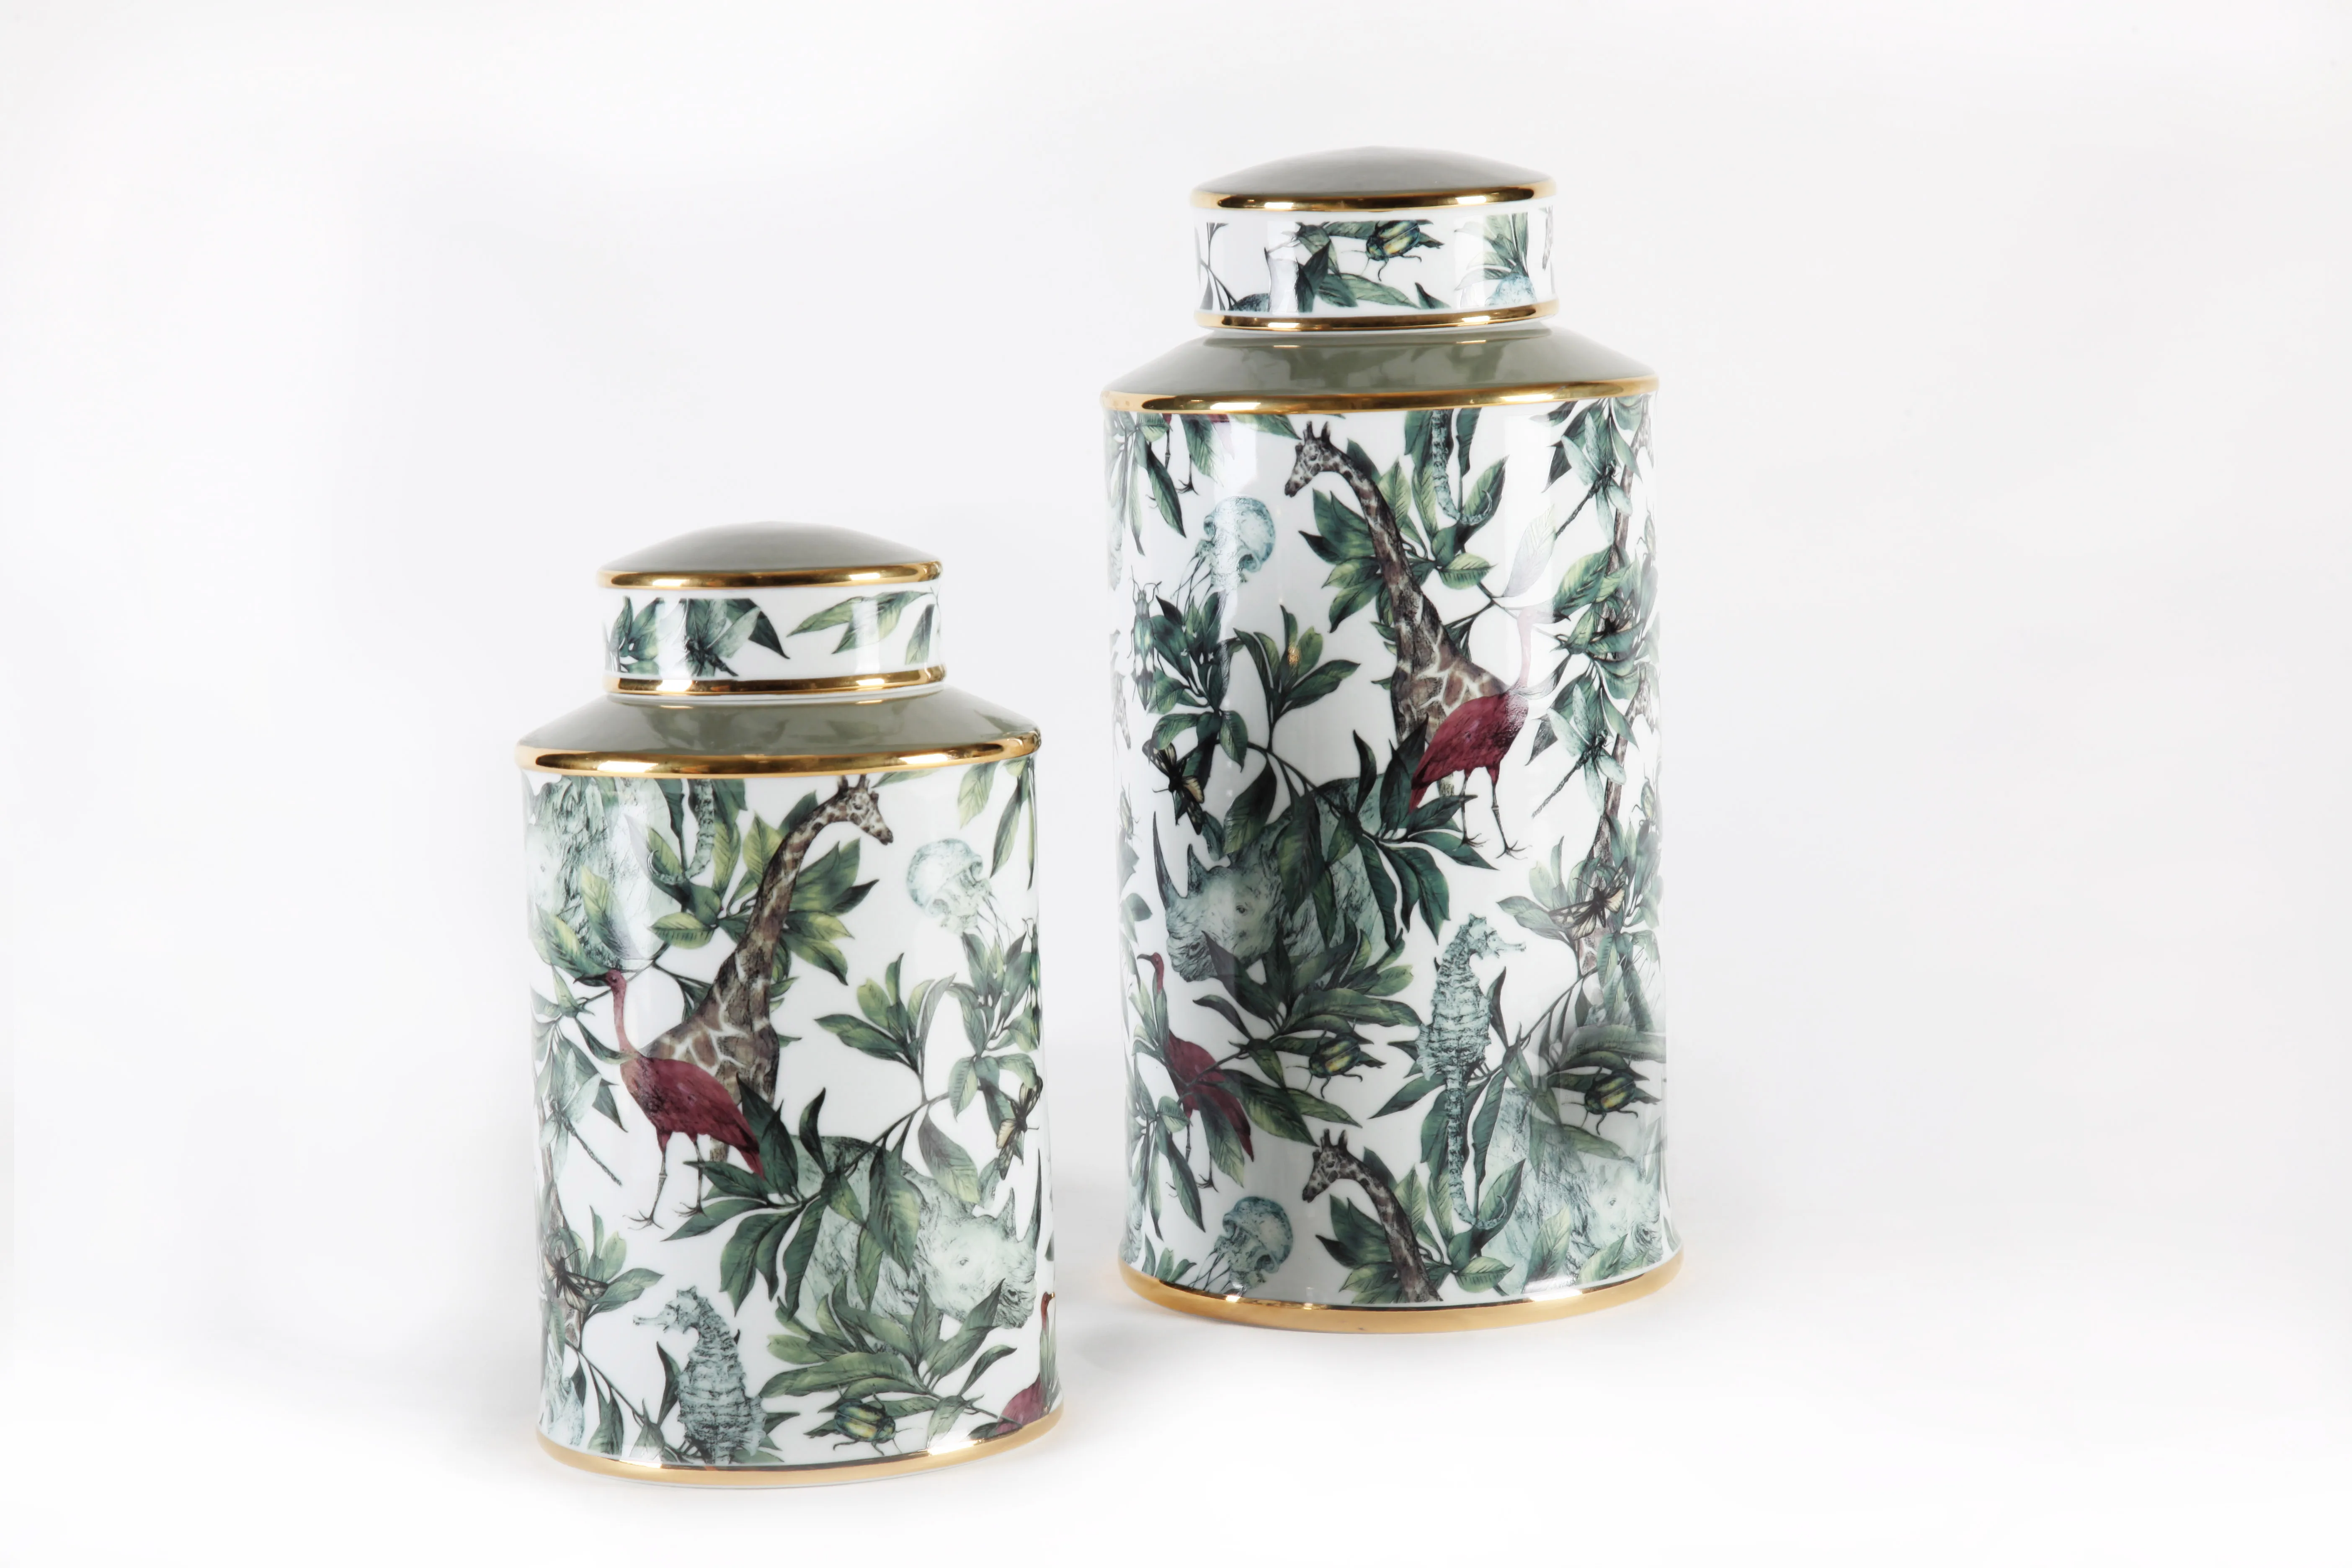 Chinese Style Home Luxury Flower Bird Plant Pattern Decorative Temple Jar Ceramic Vase For Decoration